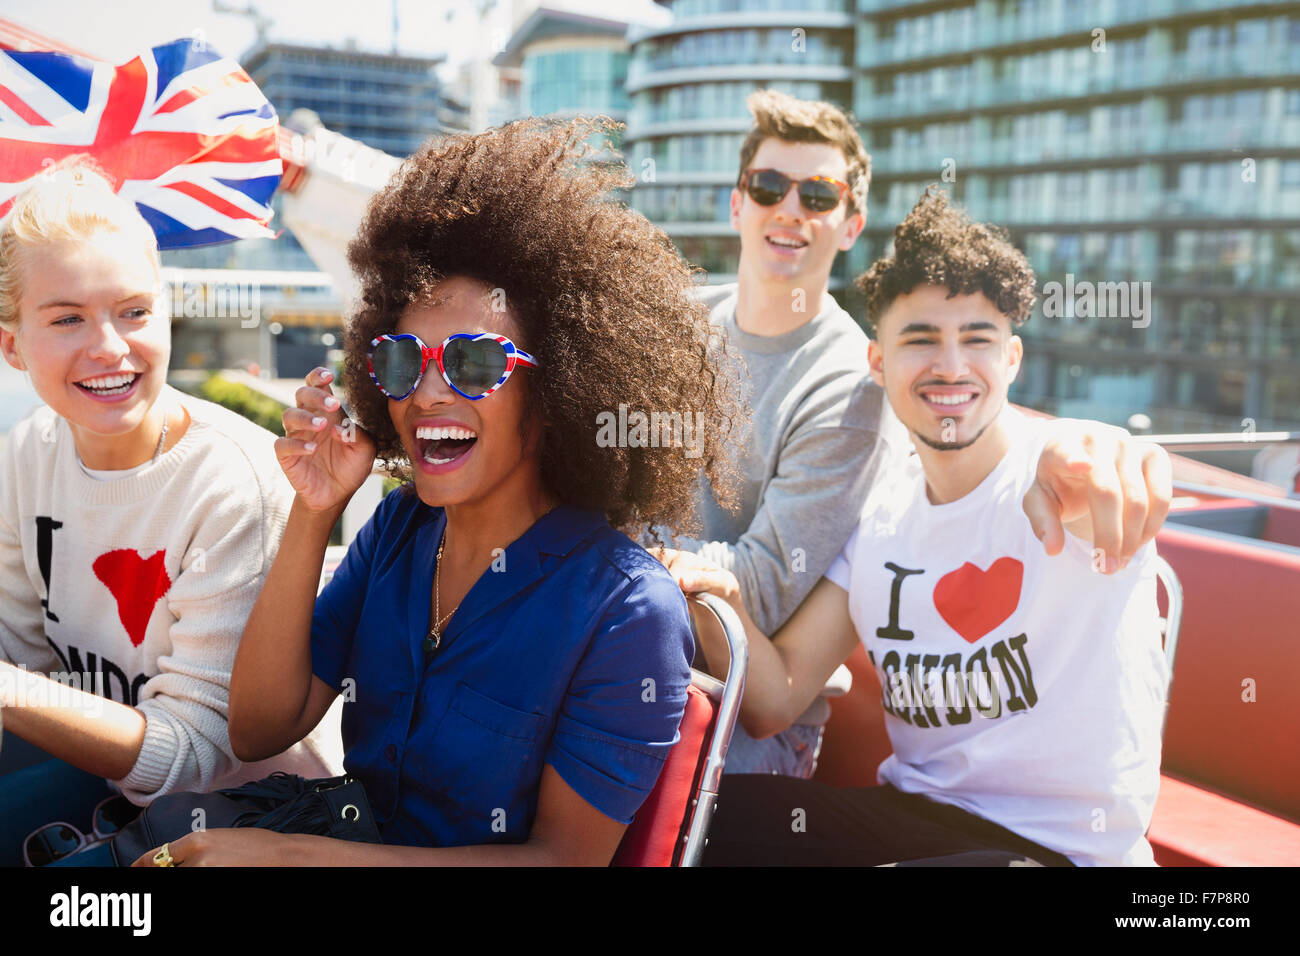 Portrait enthusiastic friends with British flag riding double-decker bus Stock Photo